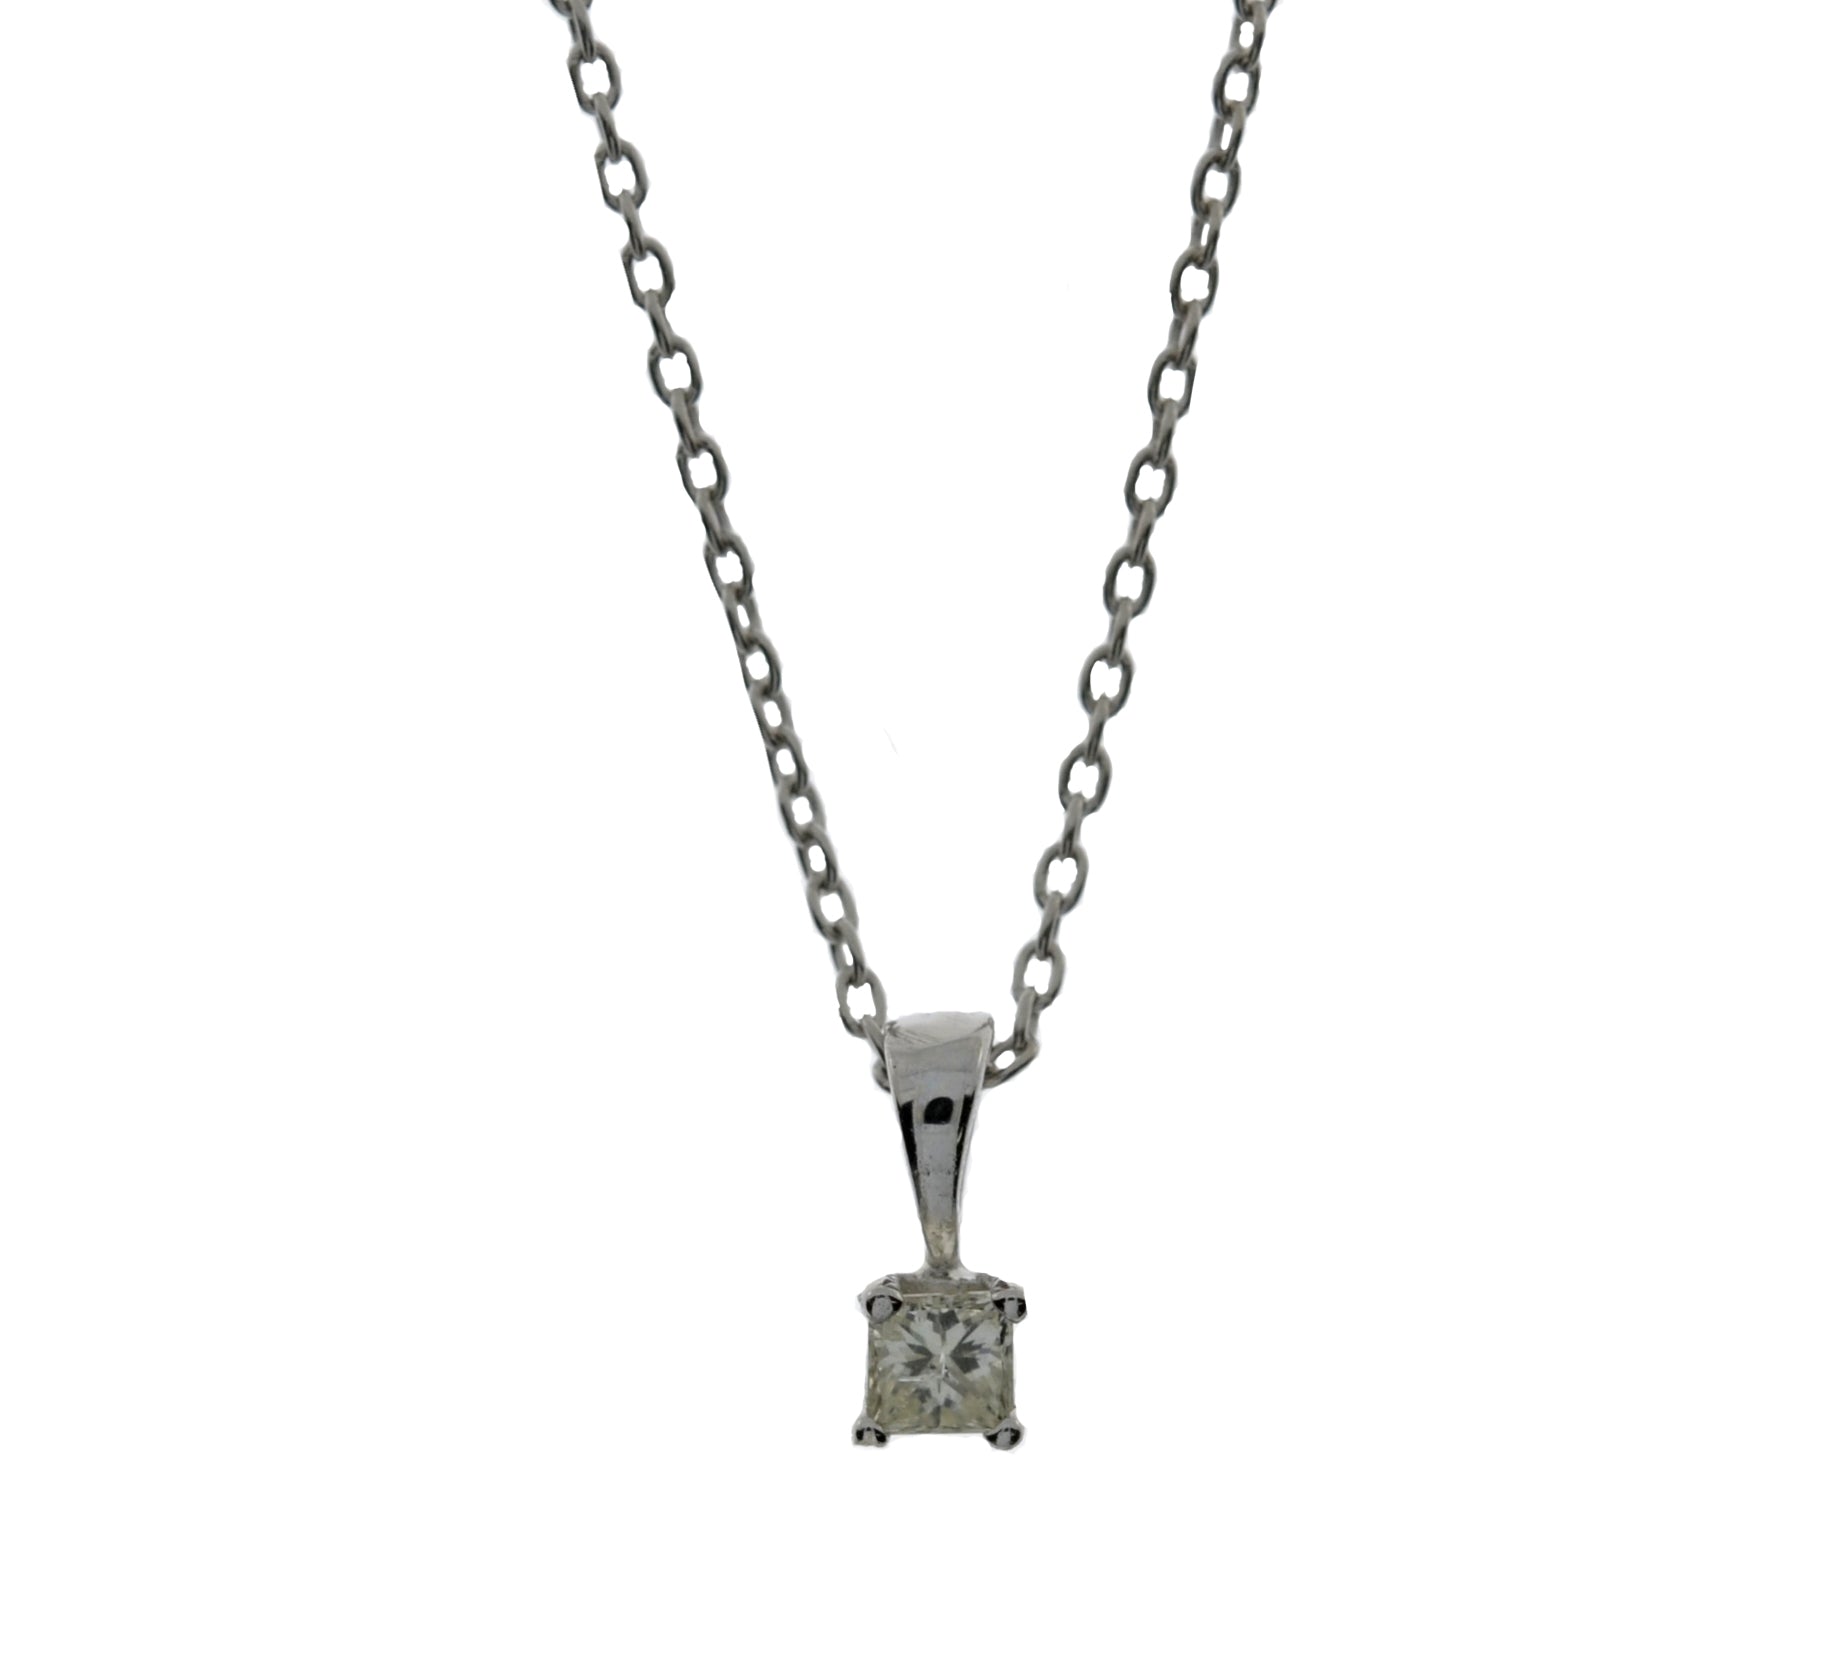 14Kt Gold 0.10 Ct Genuine Natural Diamond Princess Cut Necklace Pendant